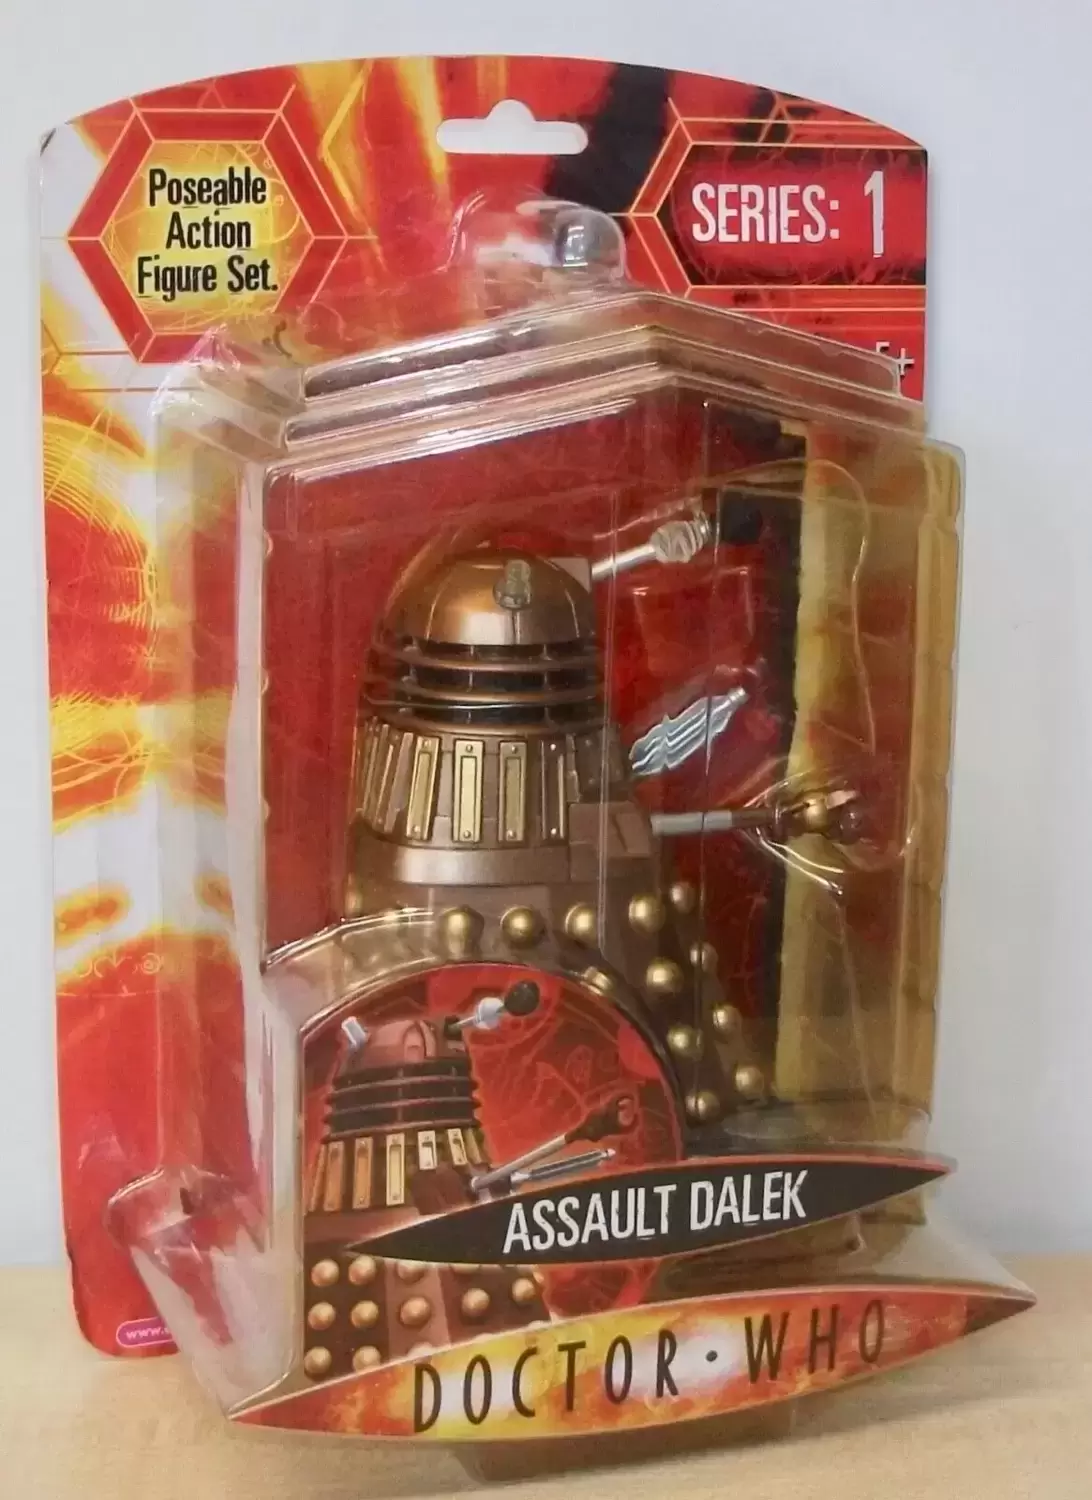 Action Figures - Assault Dalek